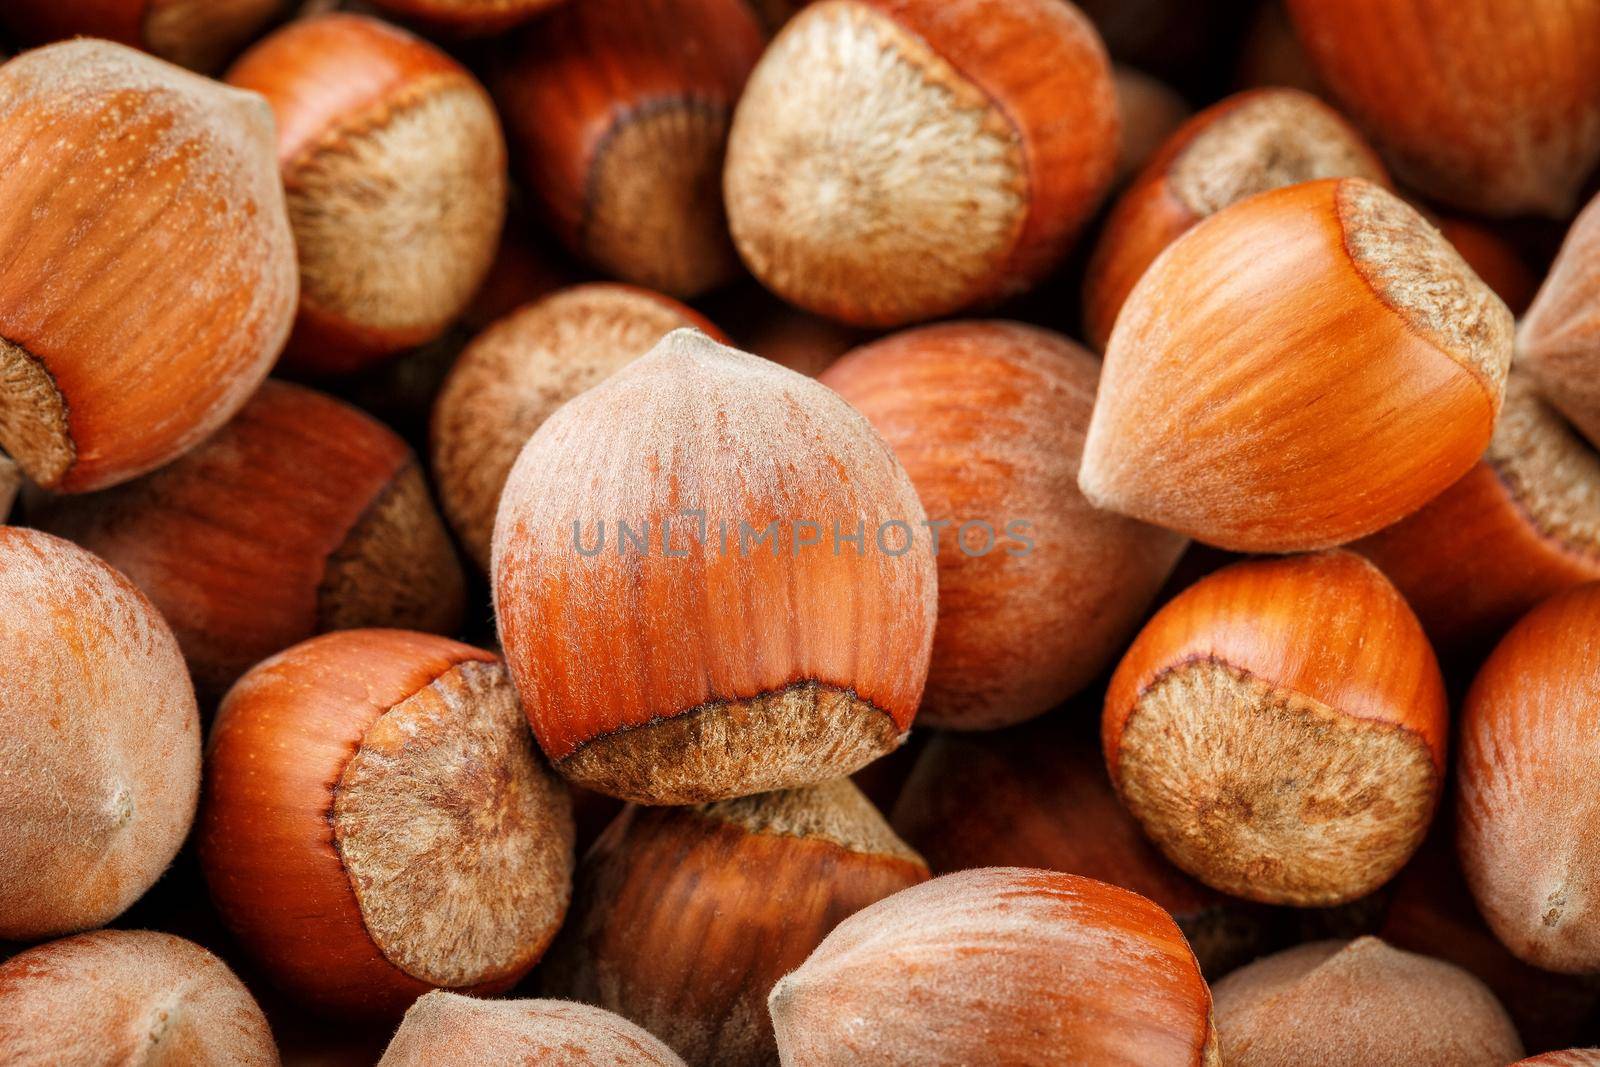 Dried unshelled hazelnuts seeds of Whole nuts as background. Hazelnuts. Stack of hazelnuts. Food background. Hazelnut background. Hazelnuts in shells background